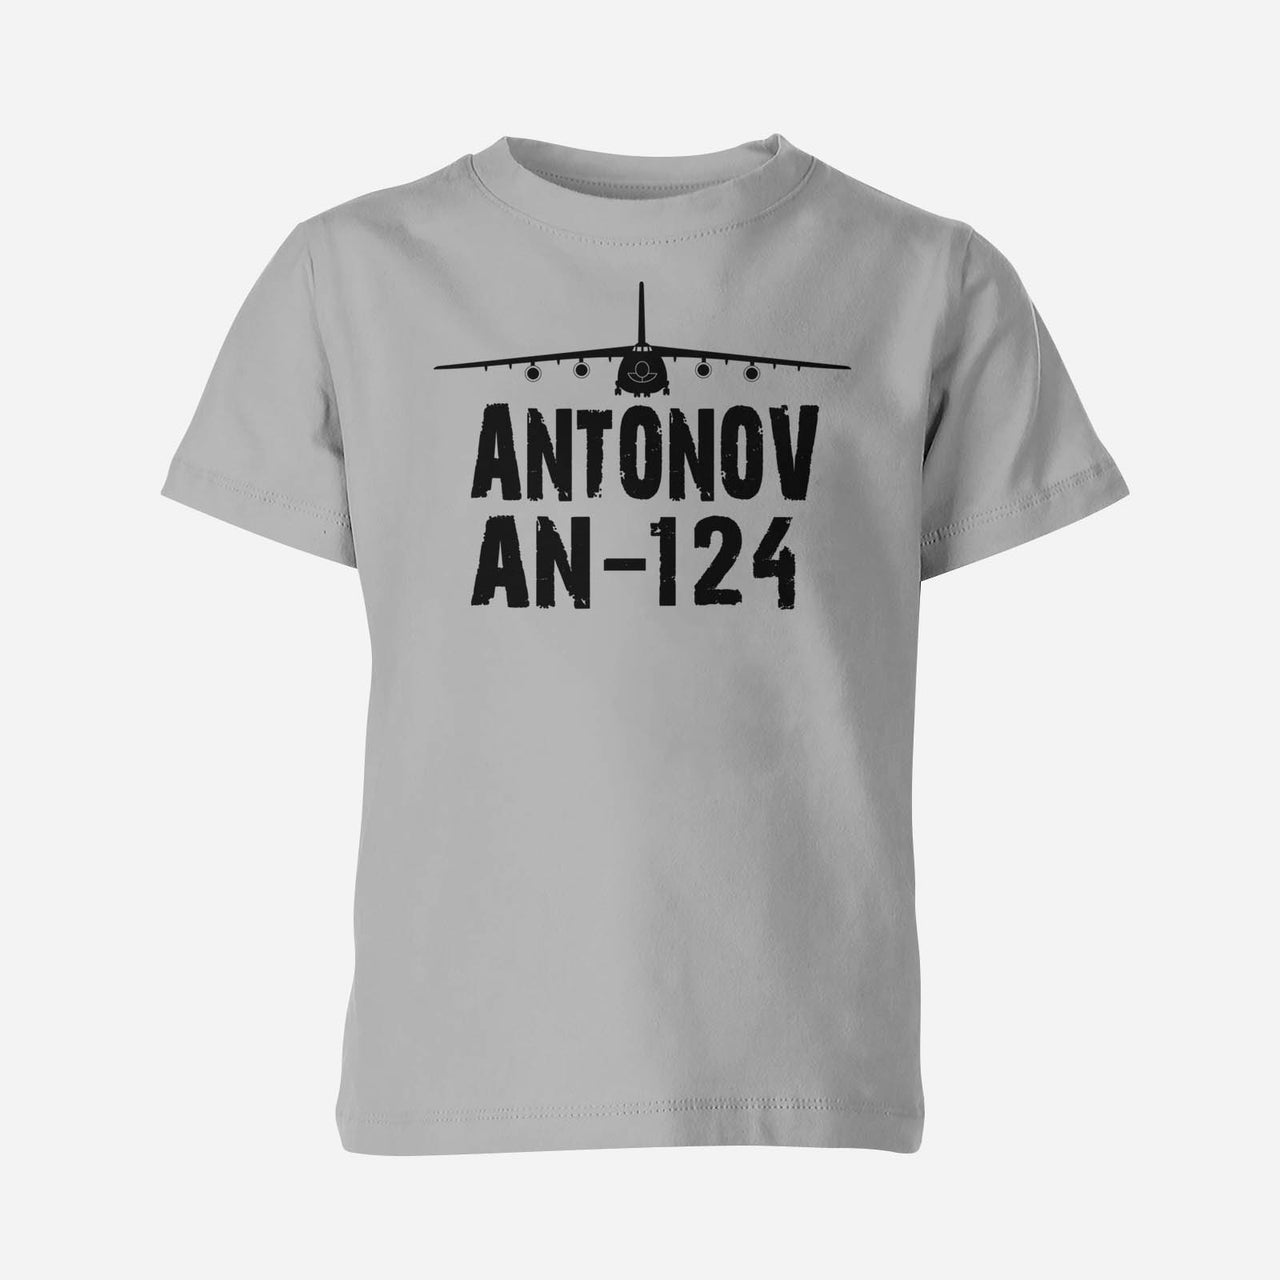 Antonov AN-124 & Plane Designed Children T-Shirts